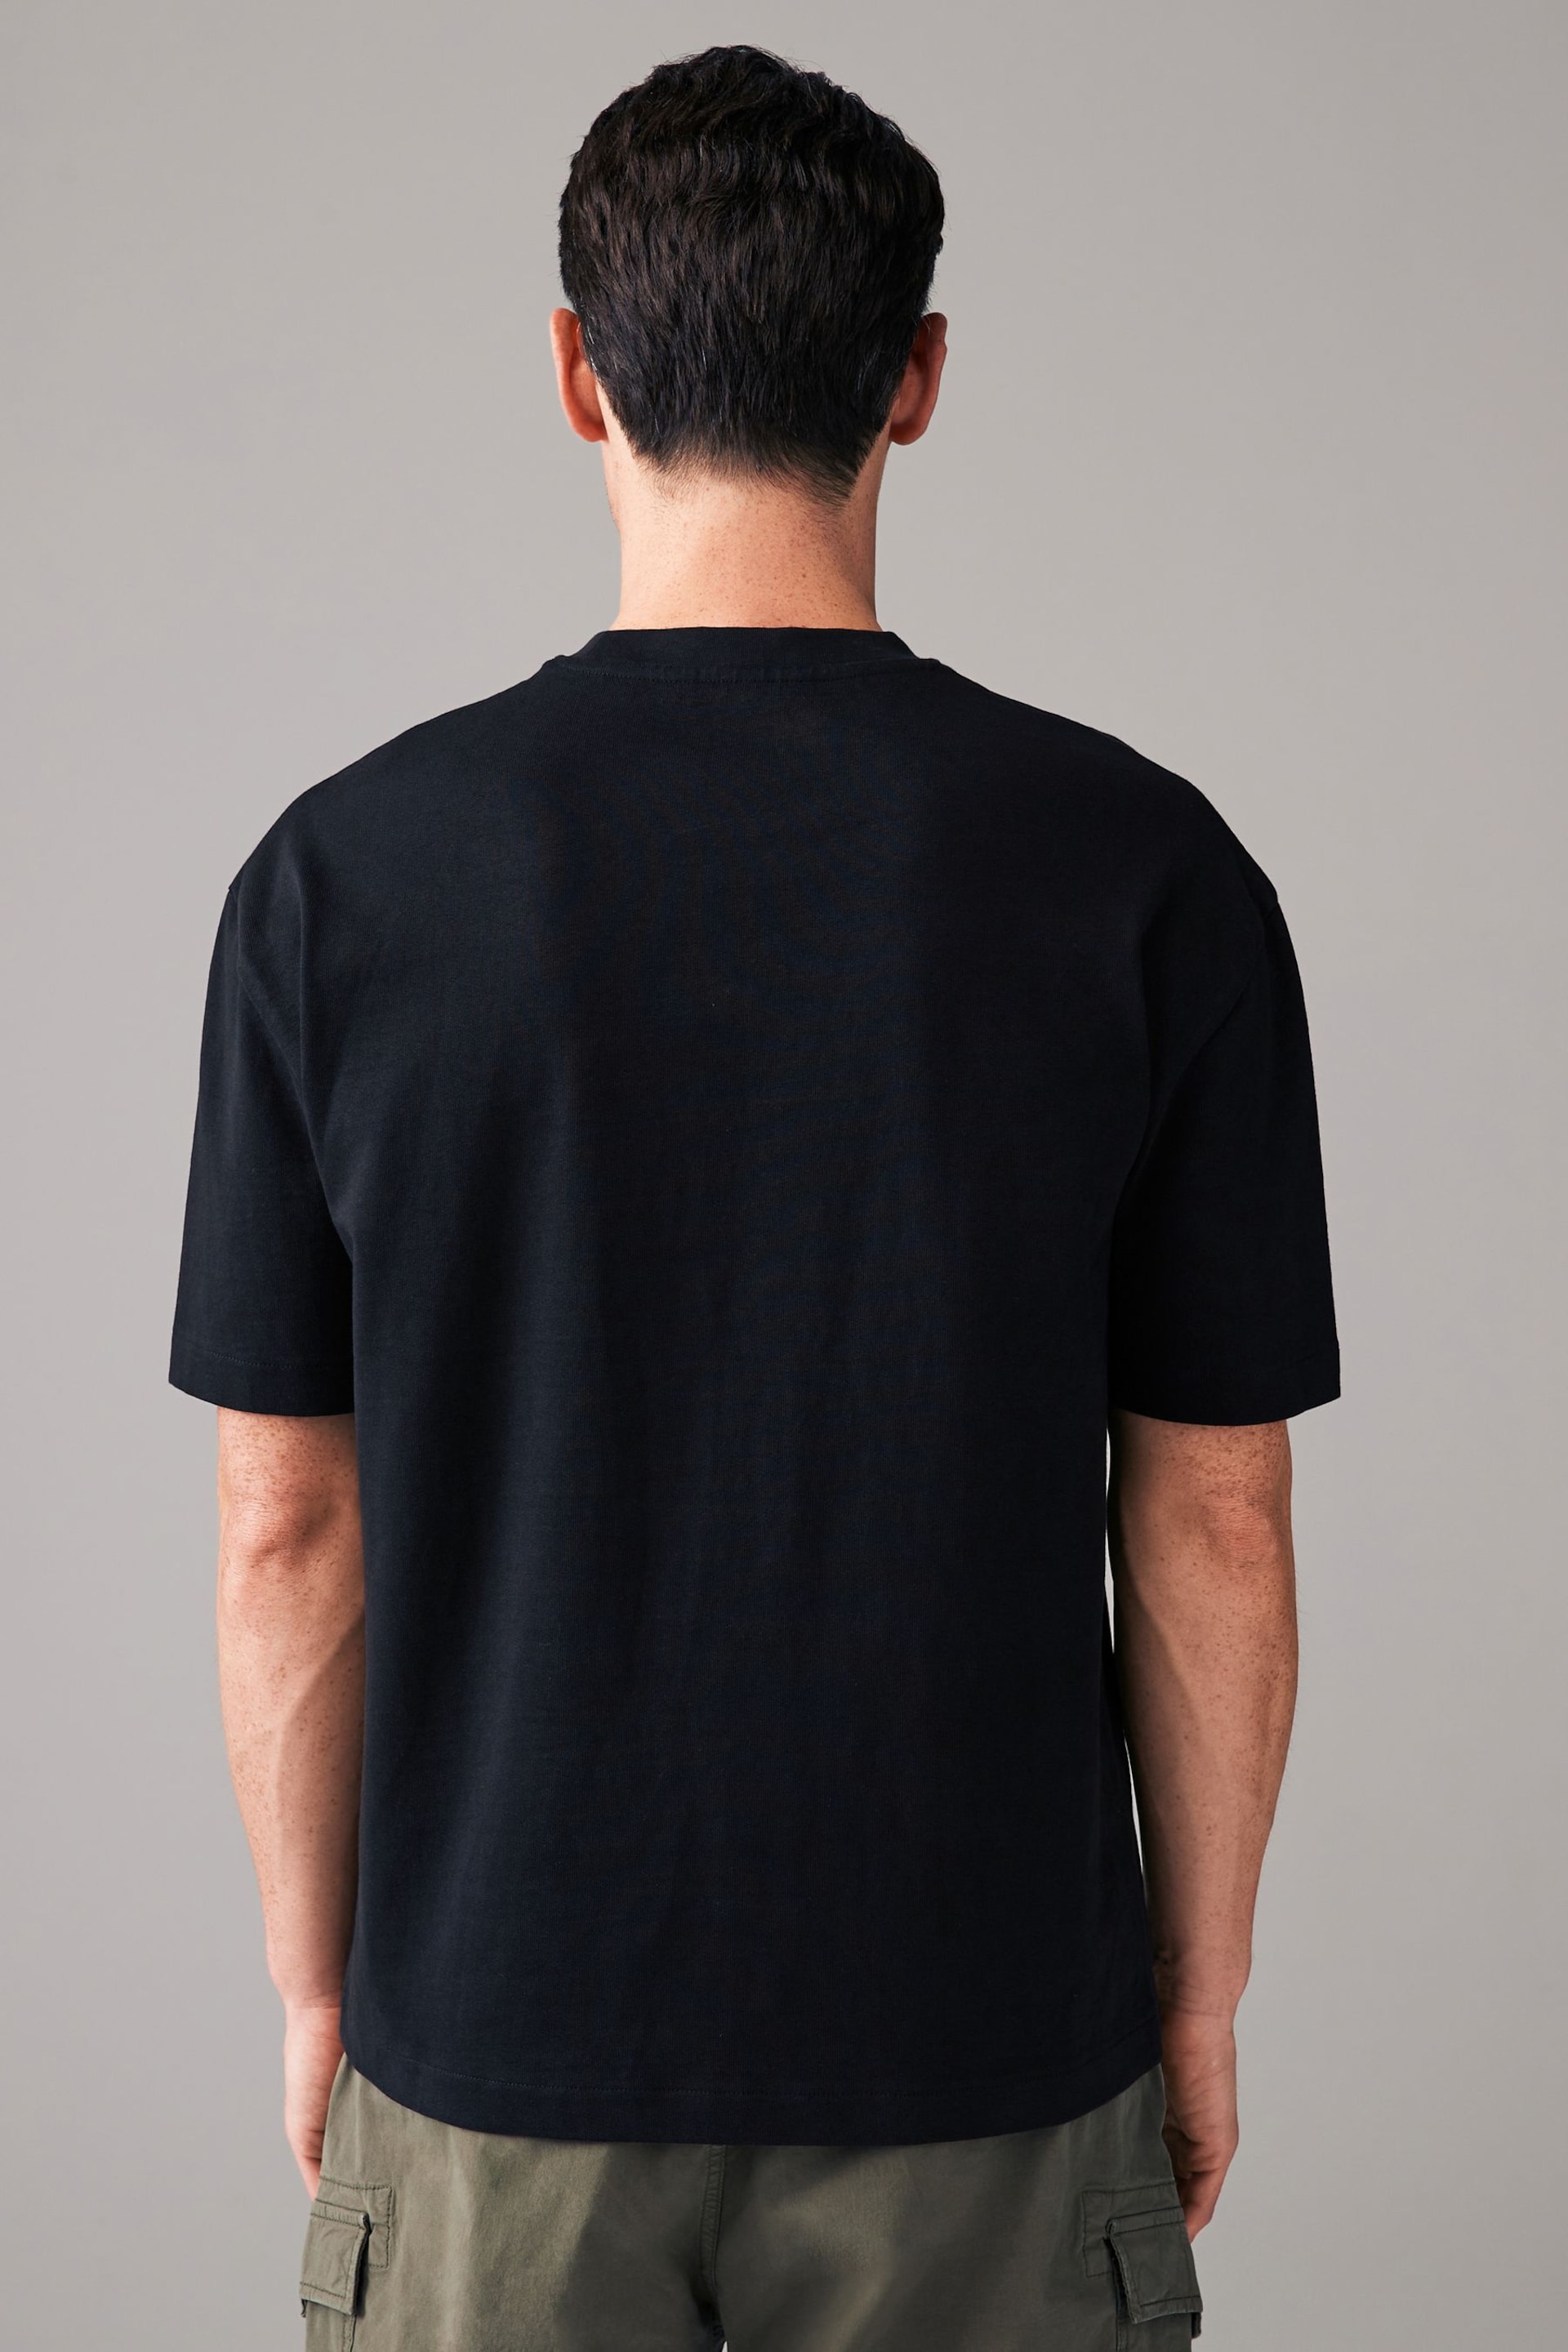 Black Oversized Heavyweight T-Shirt - Image 3 of 4